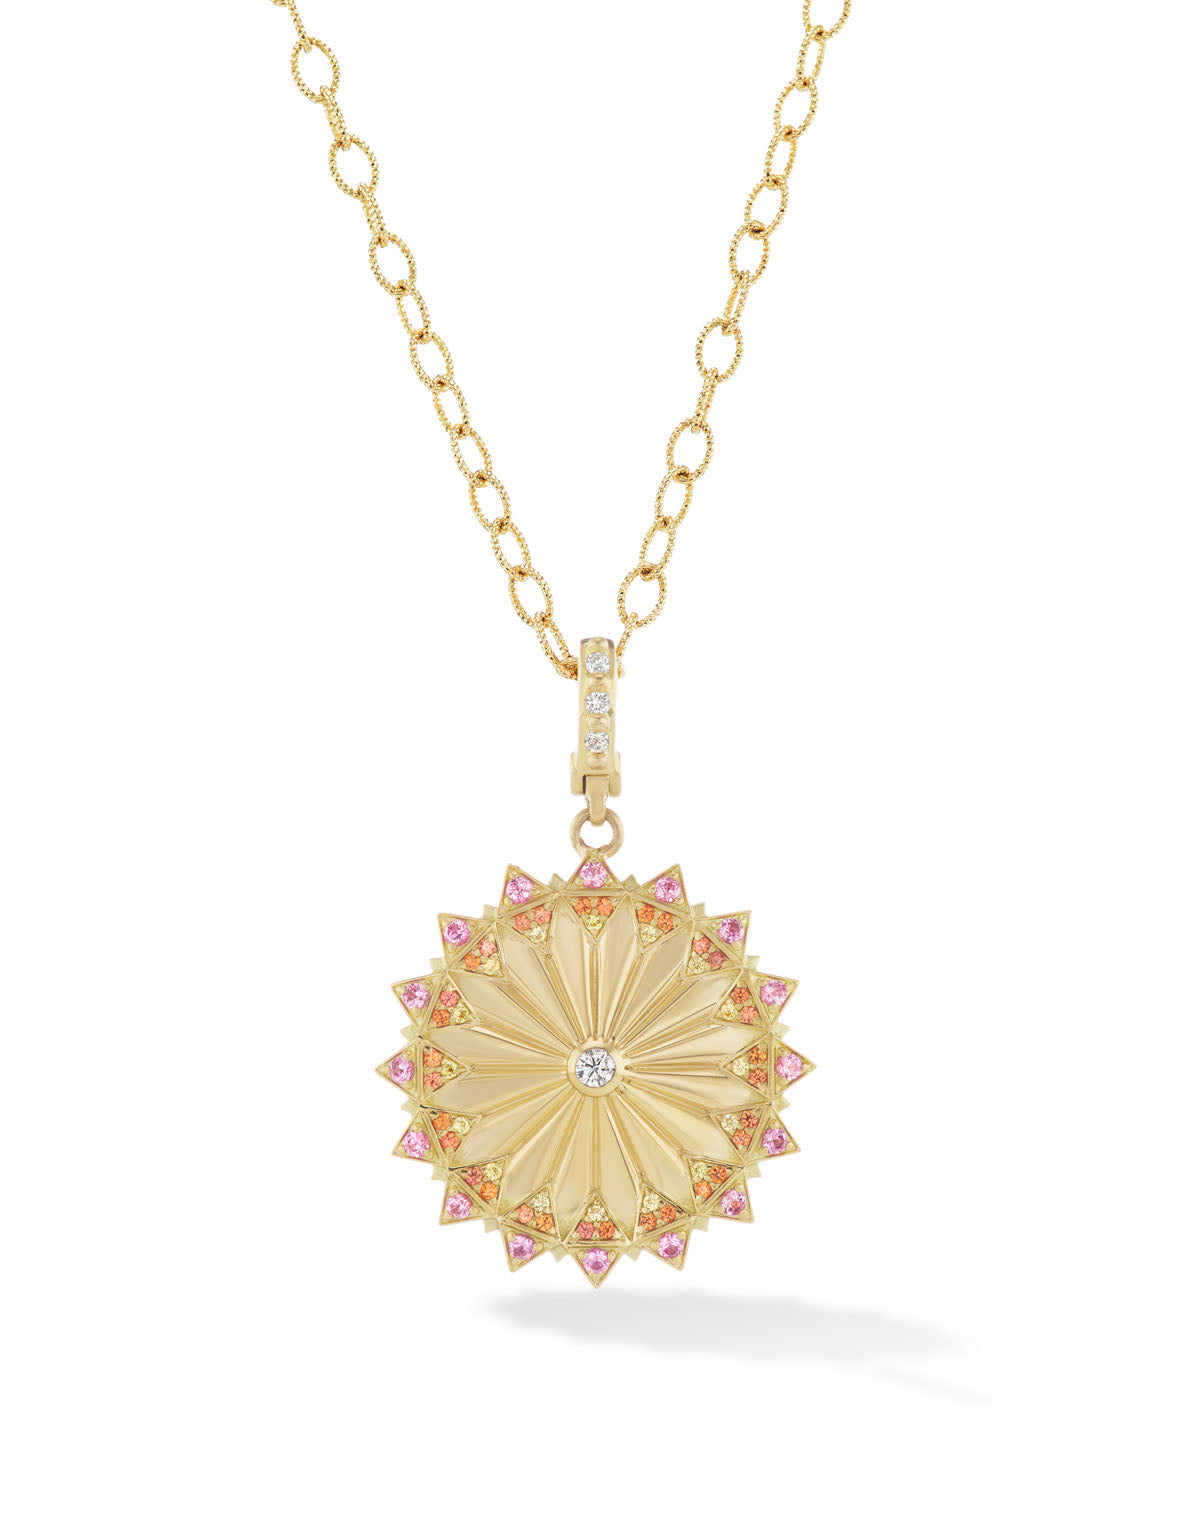 8 karat gold sapphire diamond pendant by fine jewelry designer Orly Marcel